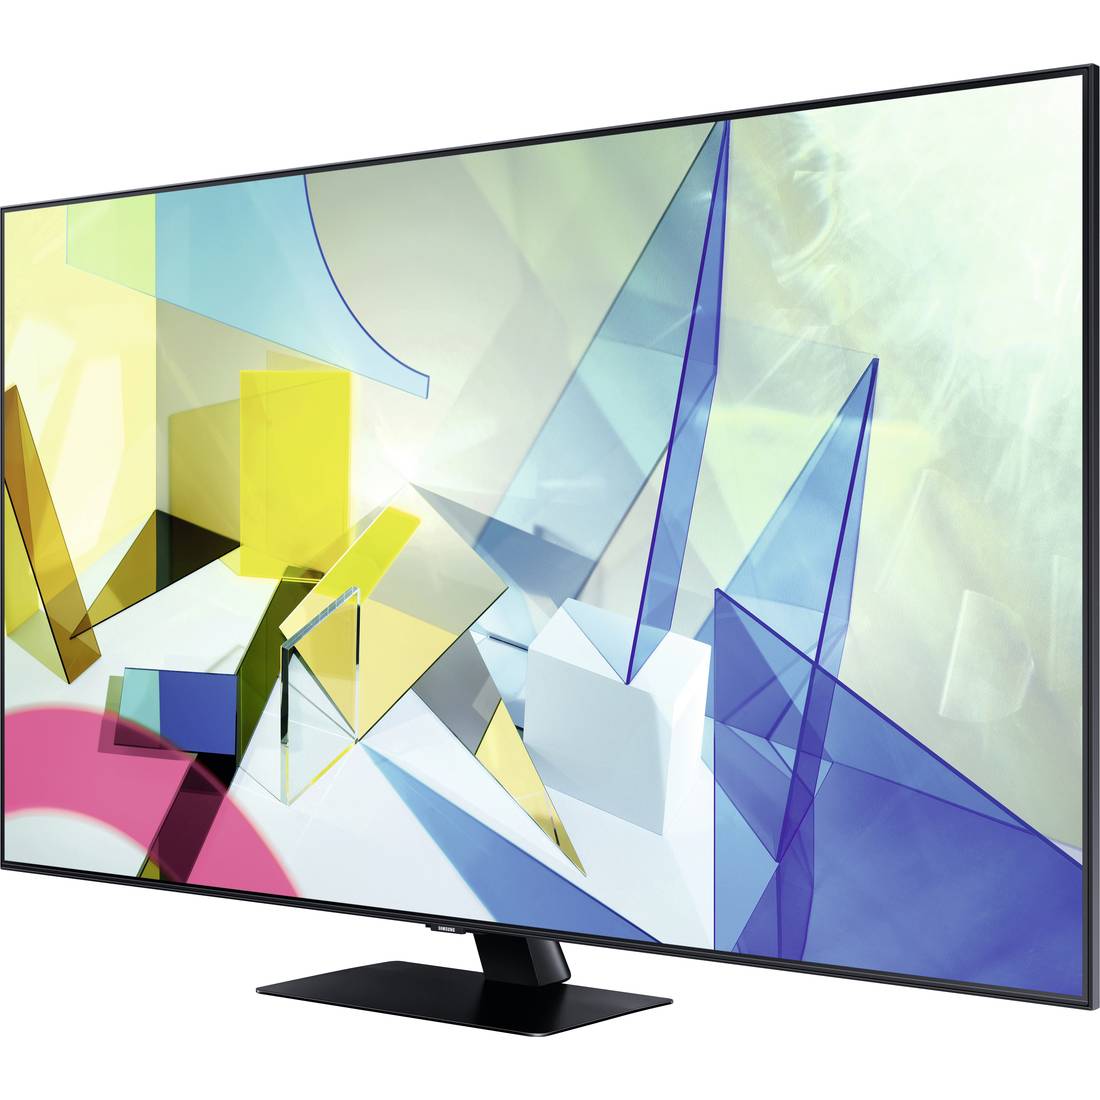 Samsung GQ55Q80 QLED-TV 138 cm 55 palac Energetska učinkovitost 2021 G (A -  G) DVB-T2, dvb-c, dvb-s2, UHD, Smart TV, WLA - AC group - webshop